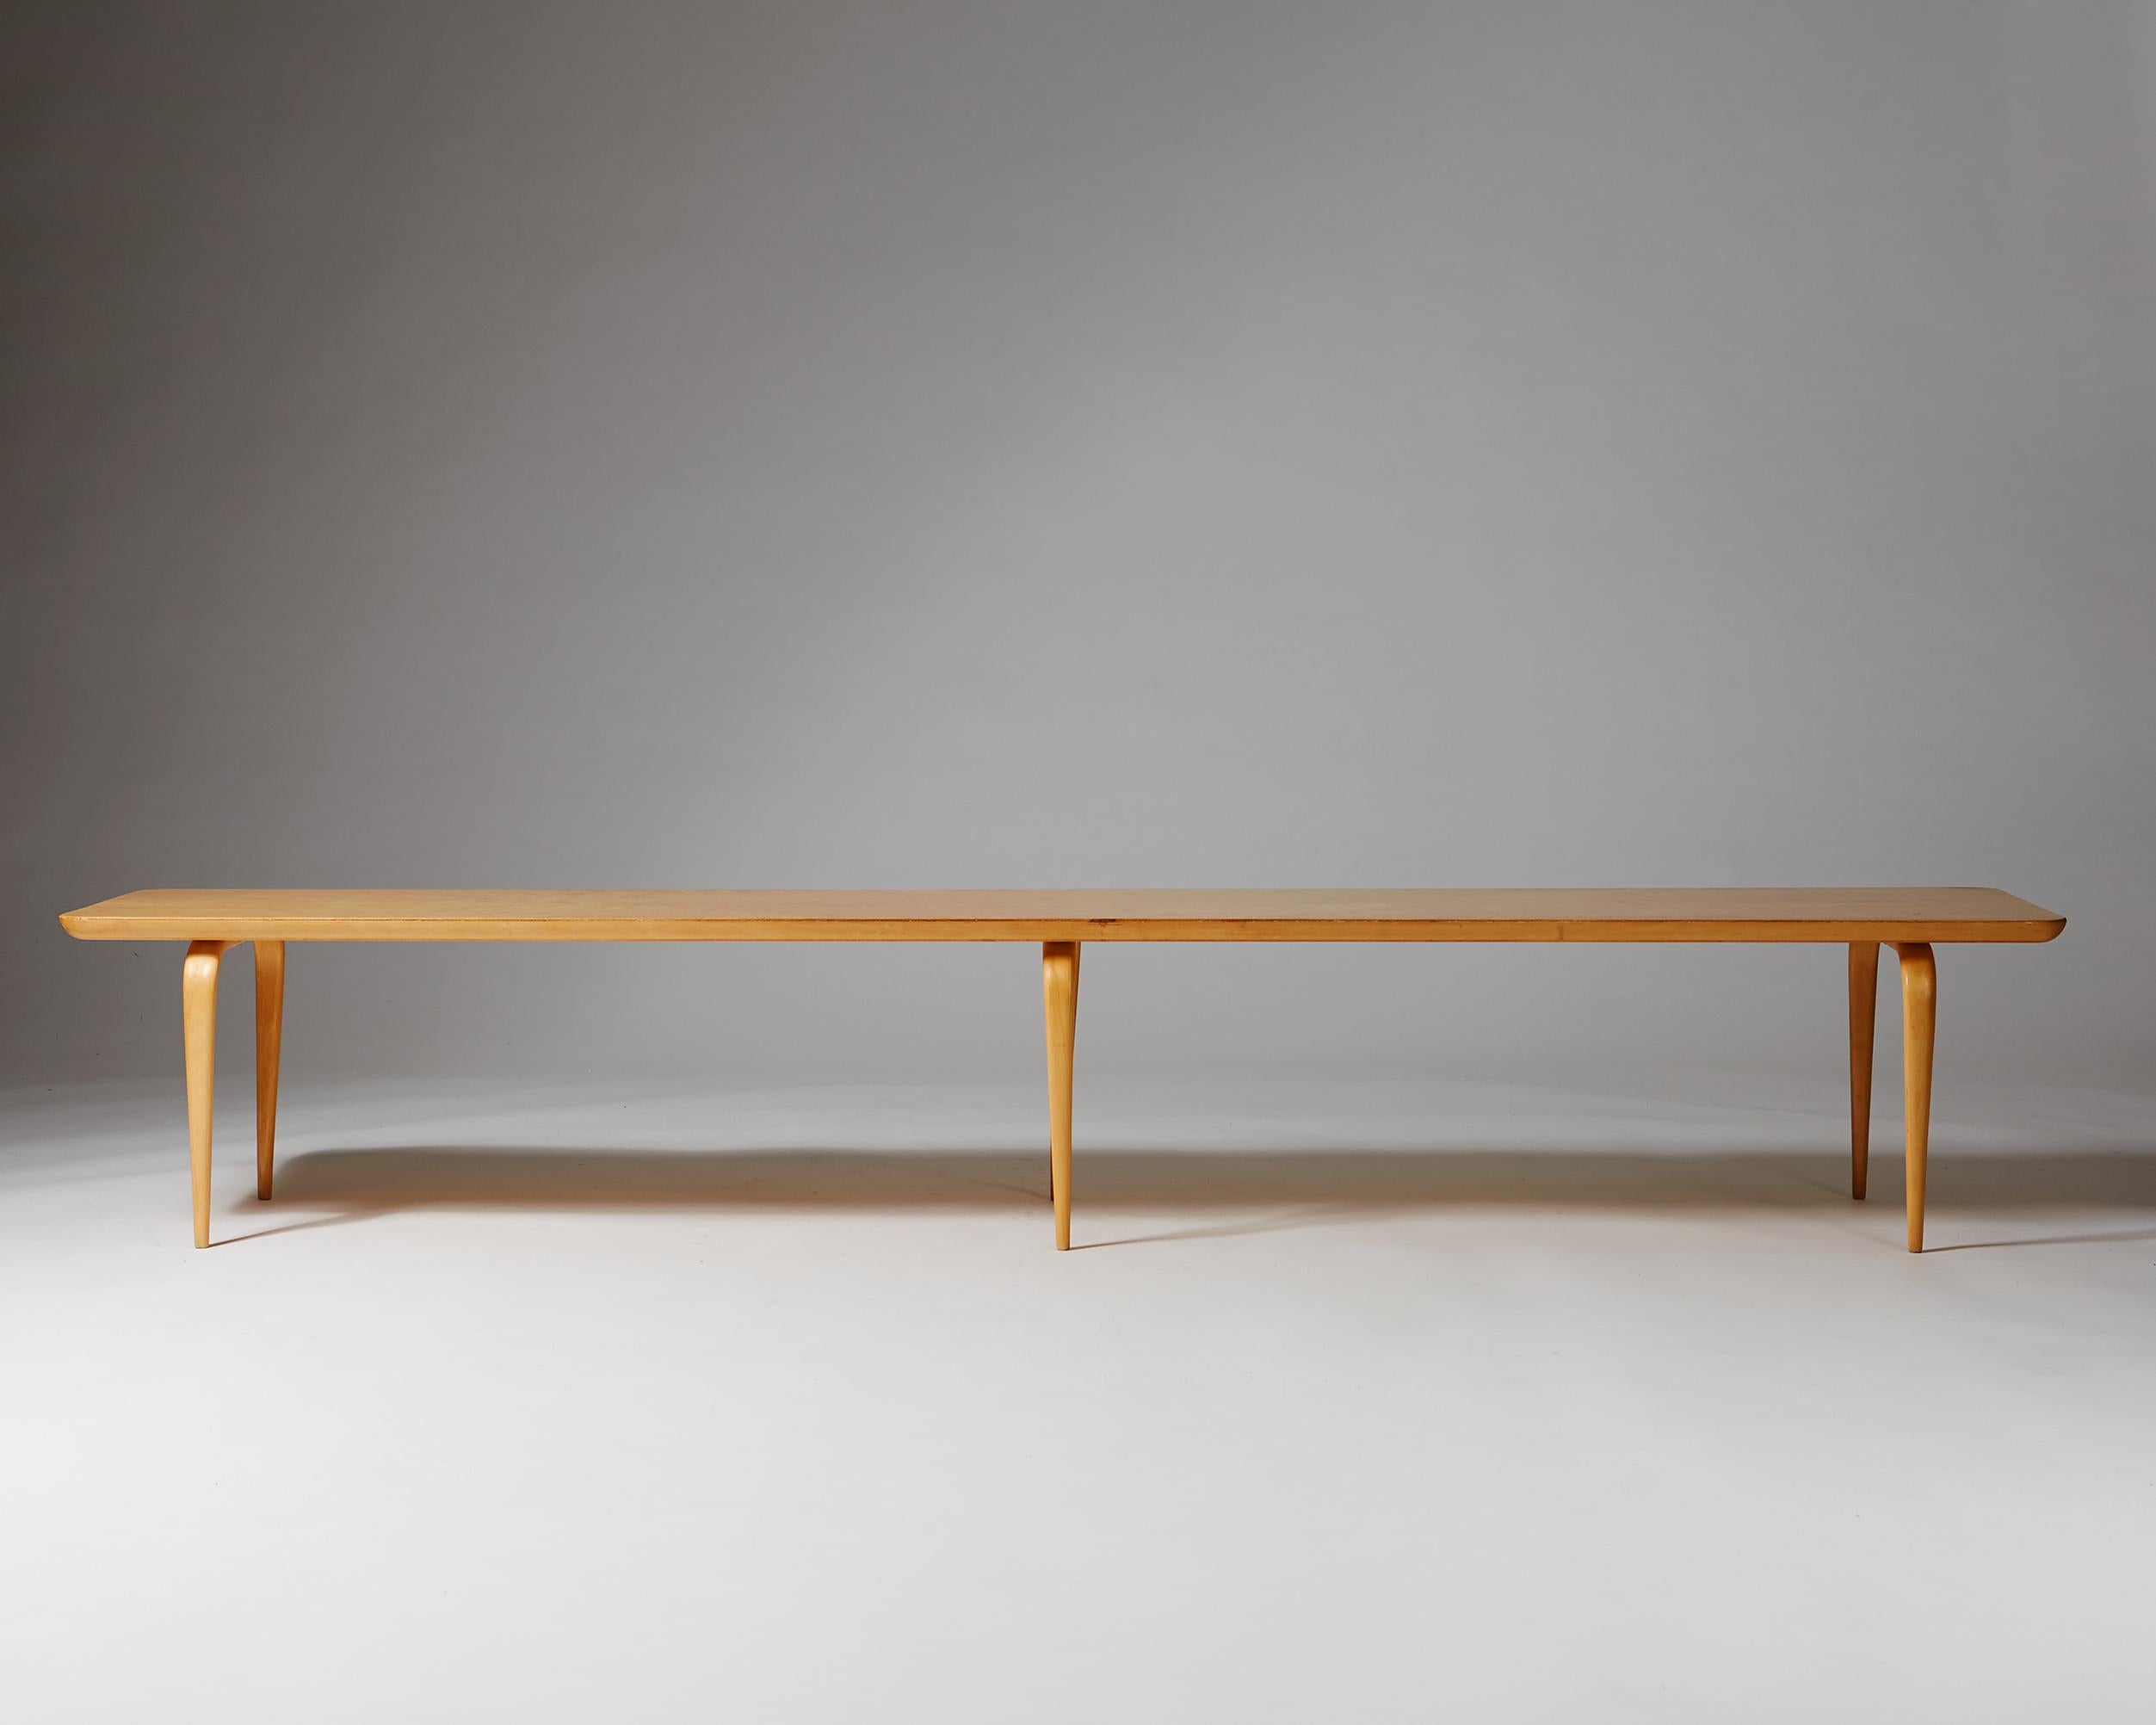 Scandinavian Modern Bench or Coffee Table “Annika” Designed by Bruno Mathsson for Karl Mathsson